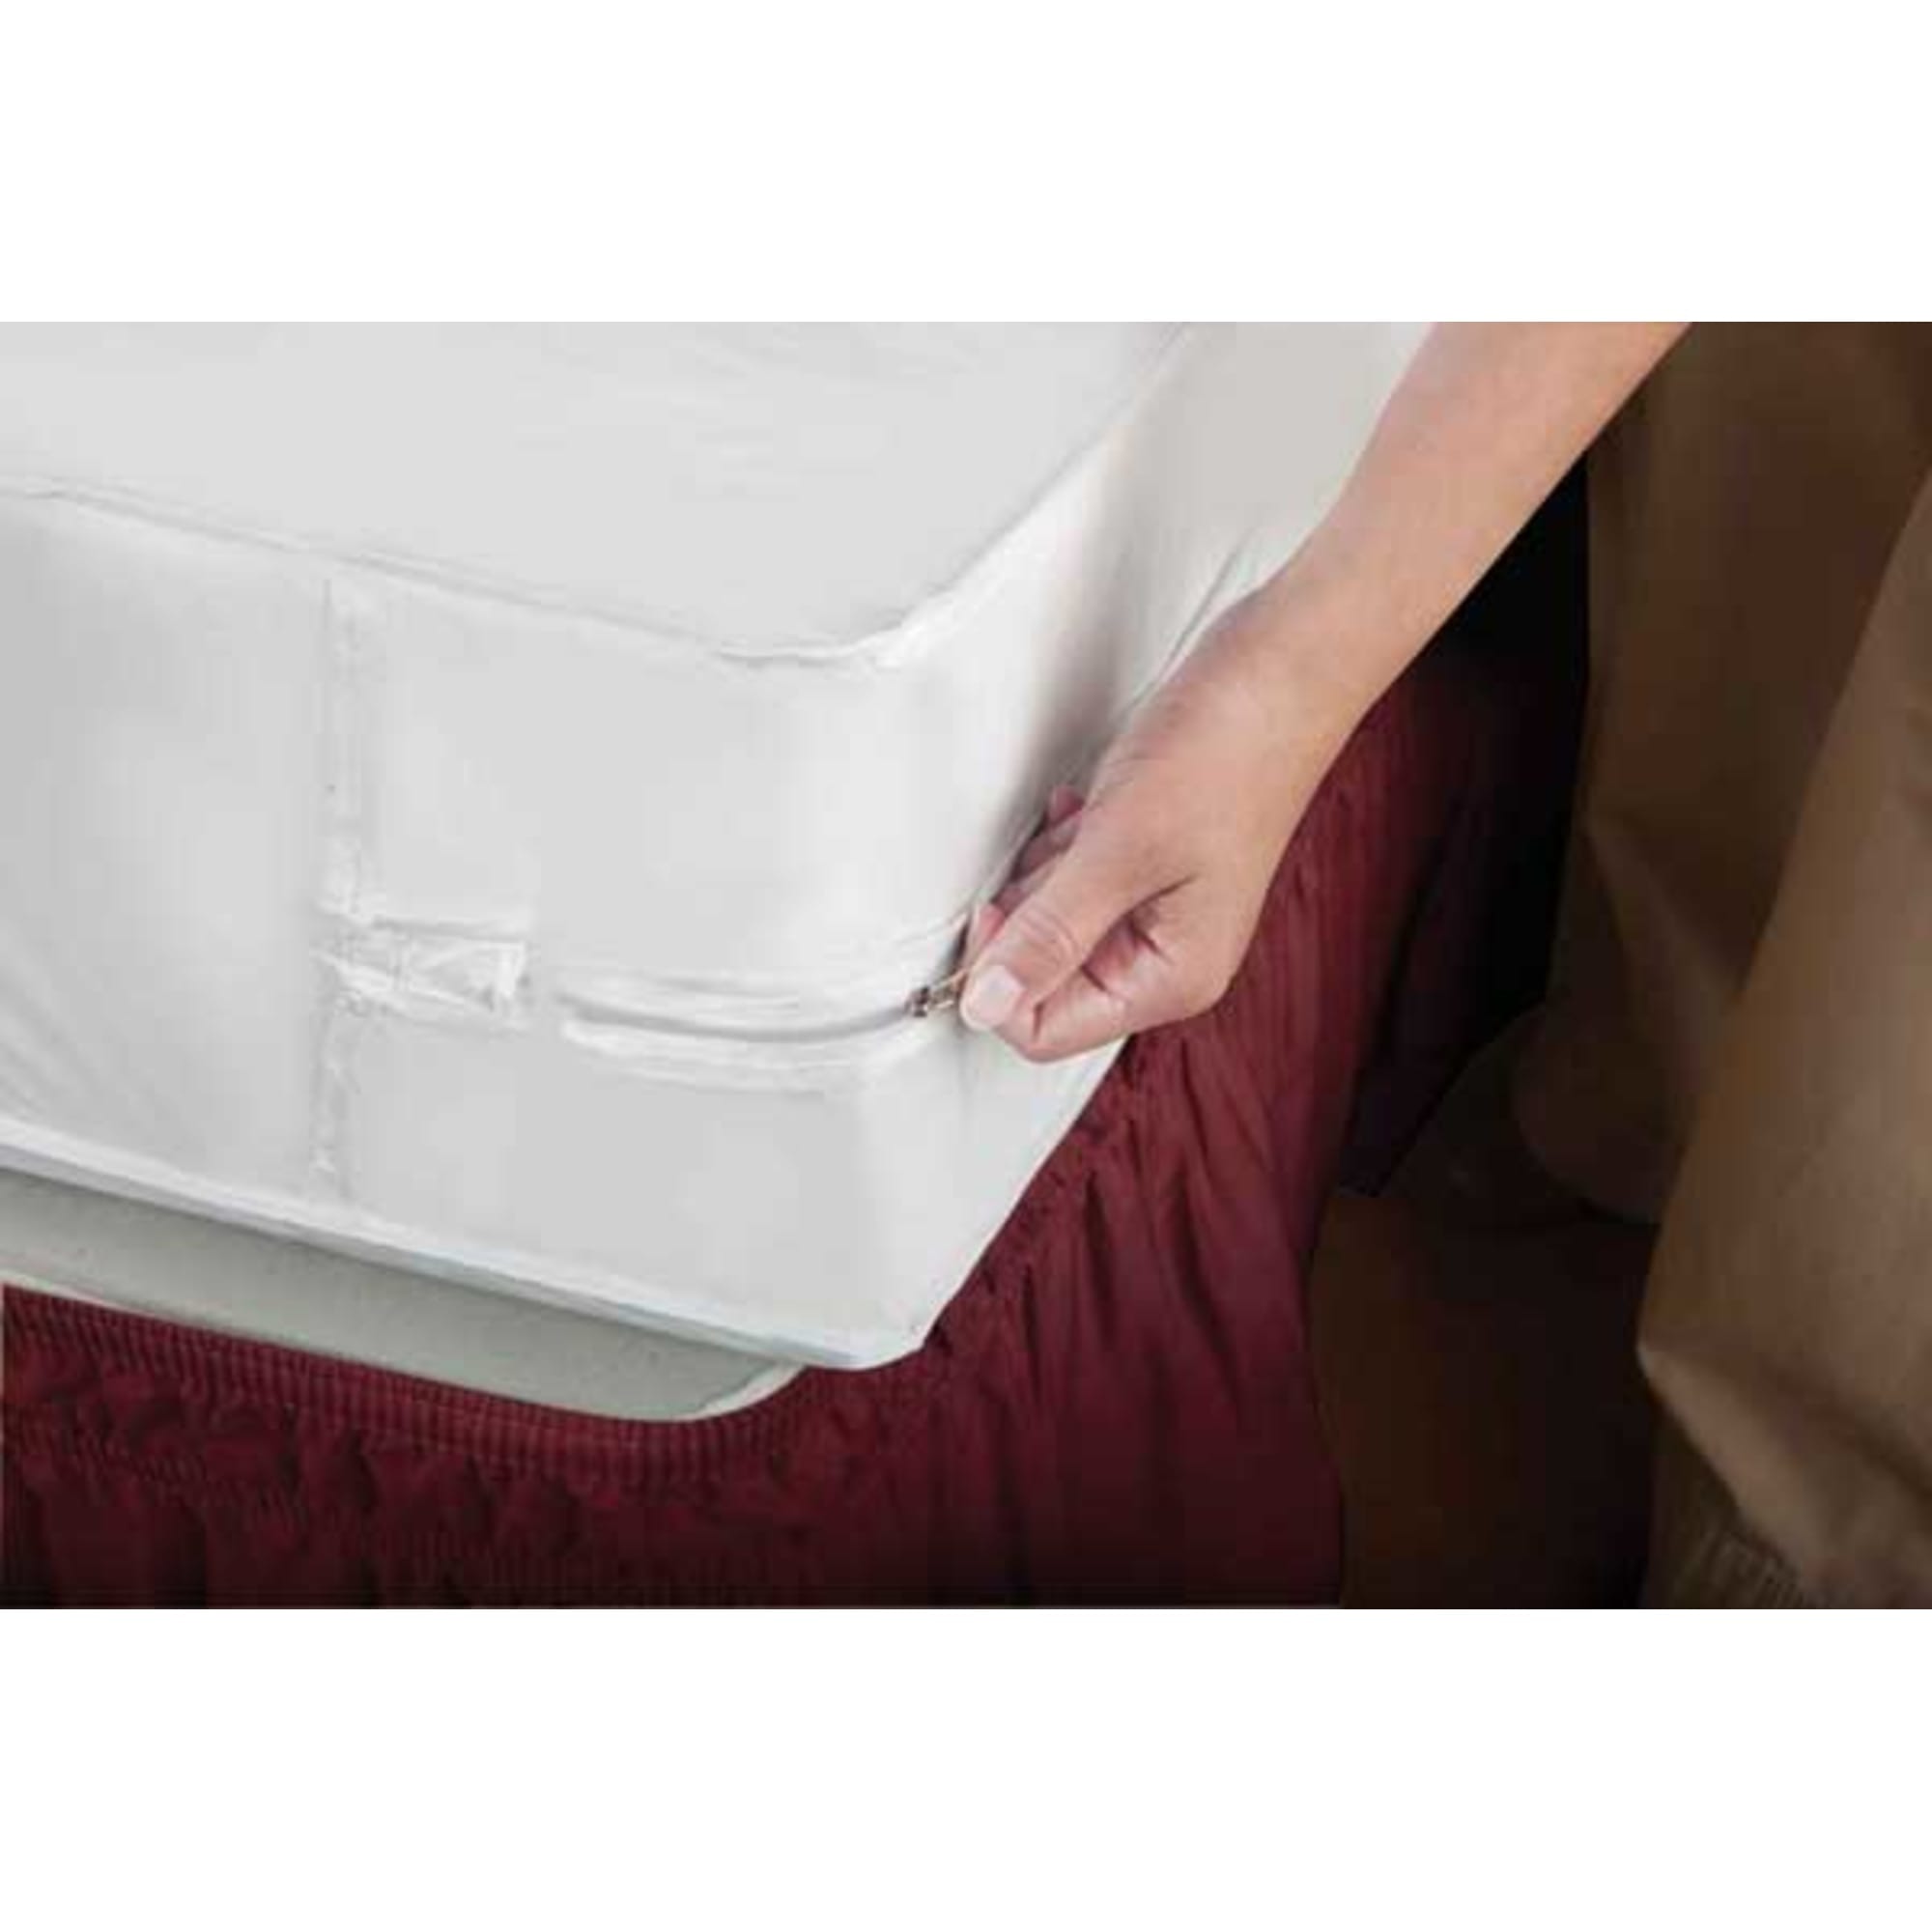 Home Basics PVC Zippered Full Size  Mattress Cover, White $5.00 EACH, CASE PACK OF 24